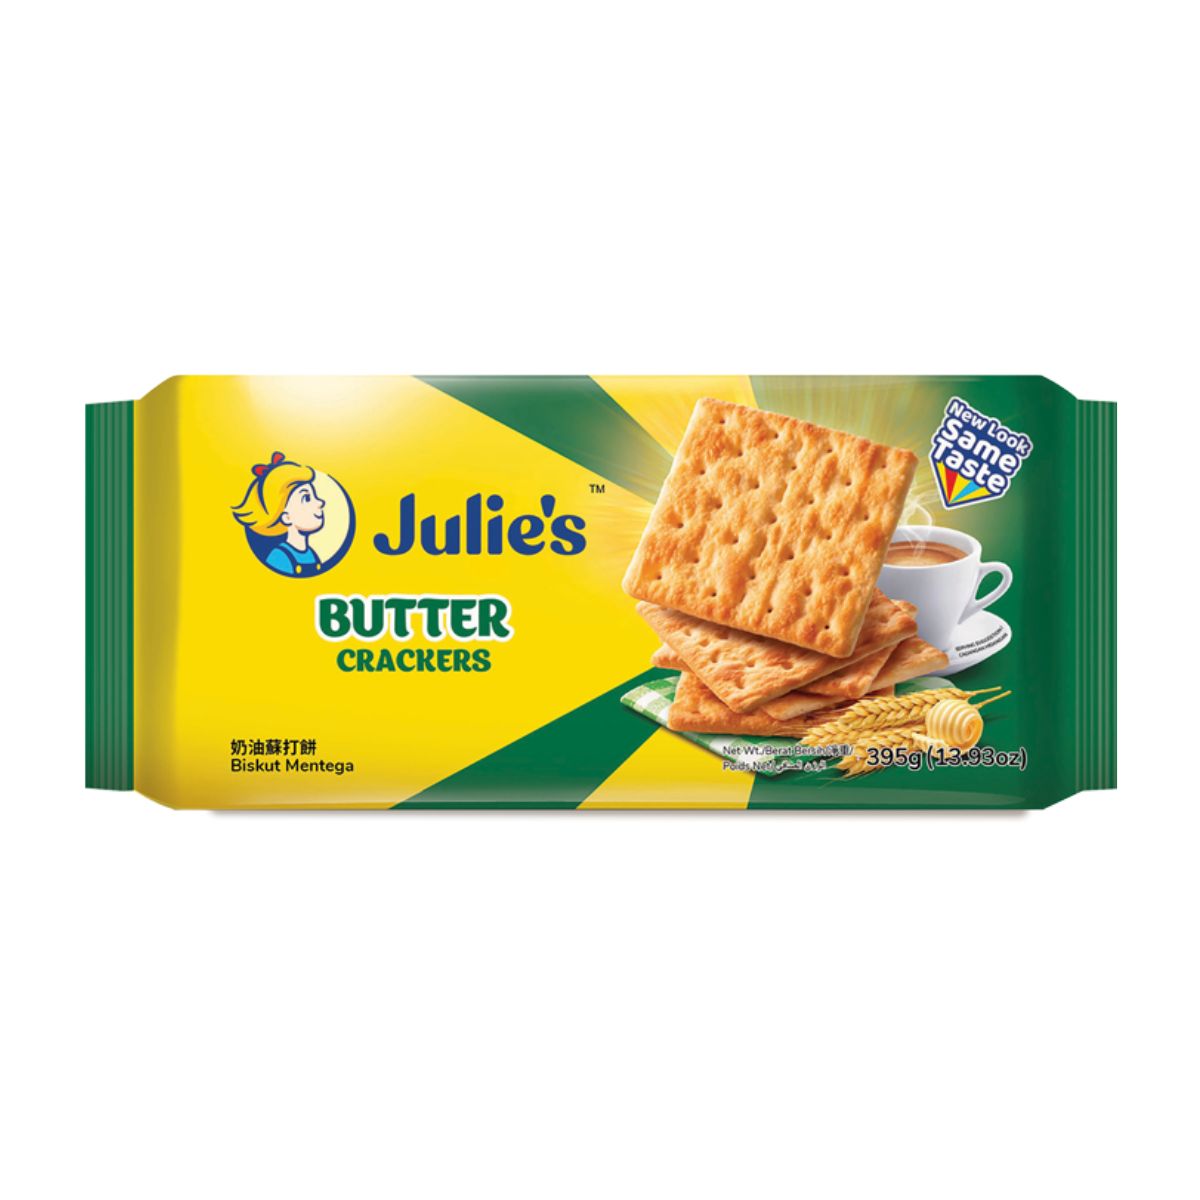 Julie's Butter Crackers - New Look Same Taste - 250g